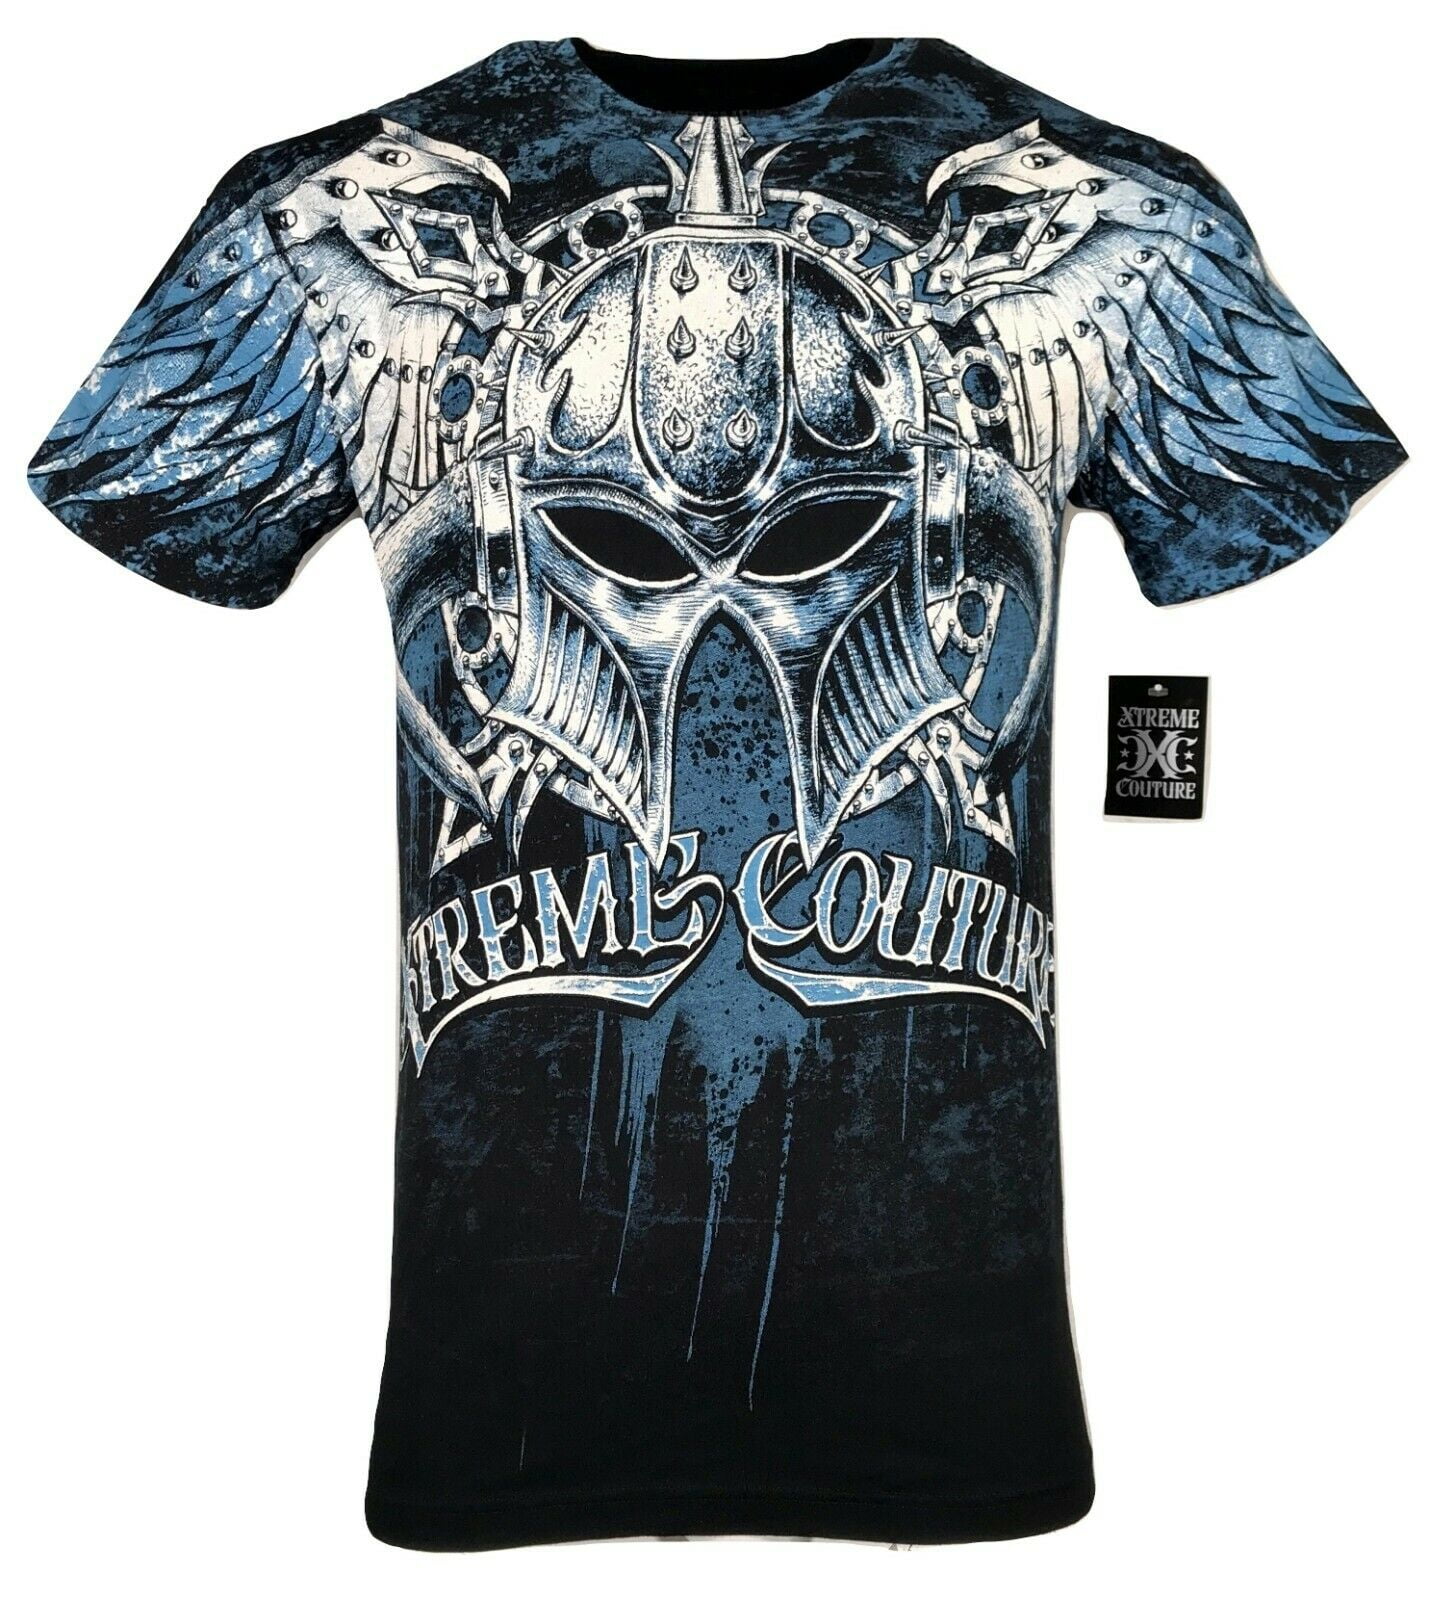 XTREME COUTURE by AFFLICTION Men THERMAL Shirt KILLER Skulls Biker MMA UFC $58 b